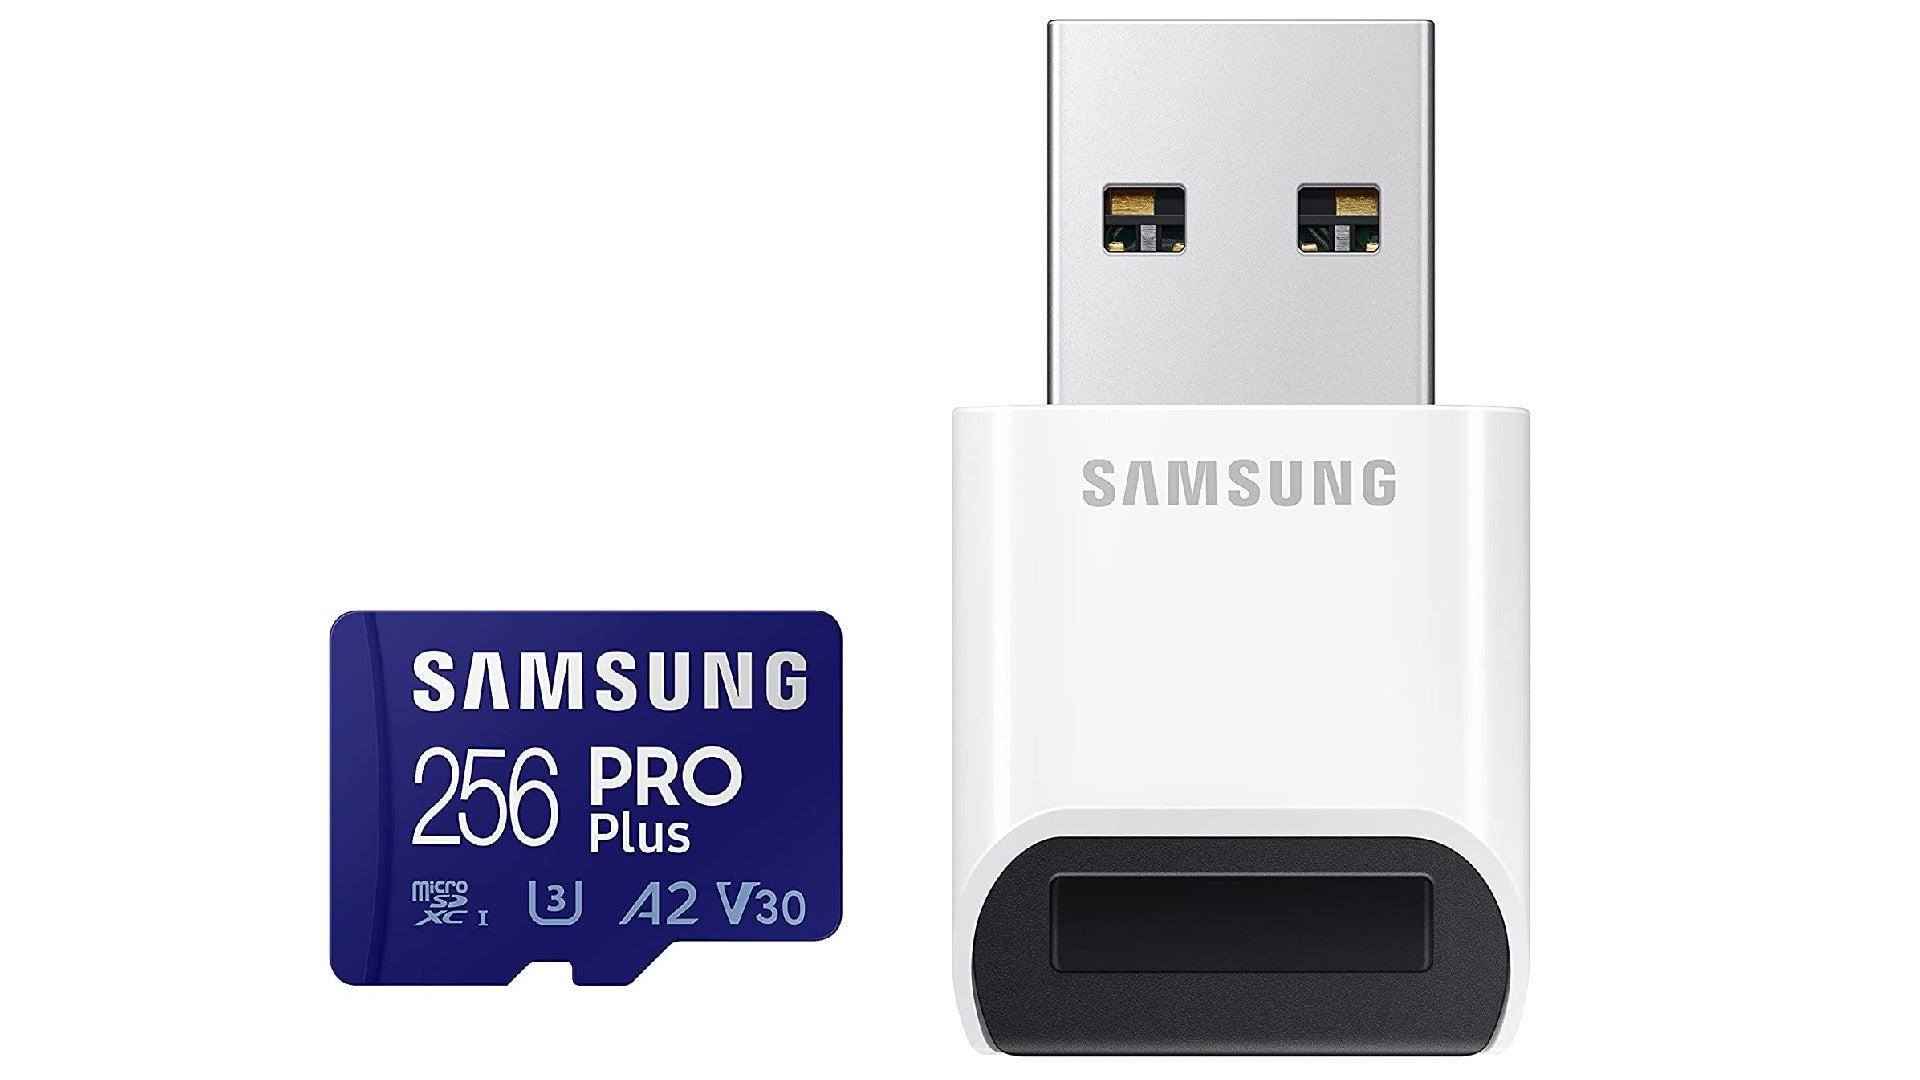 Samsung Micro SD card and USB reader